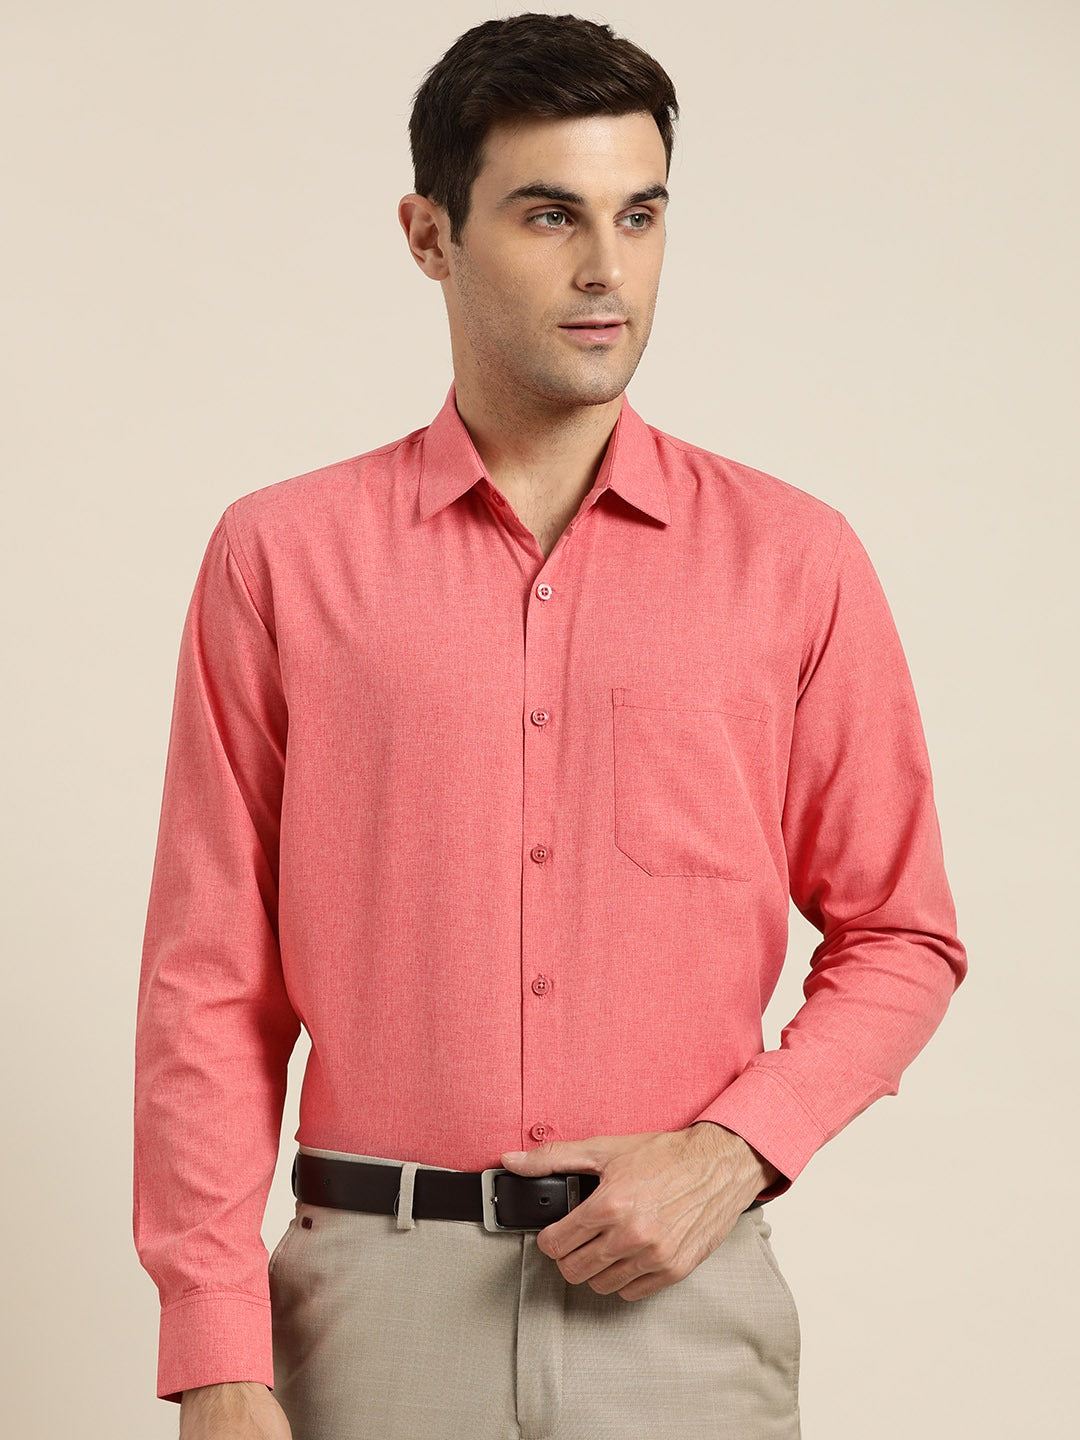 Men's Cotton Coral Casual Shirt